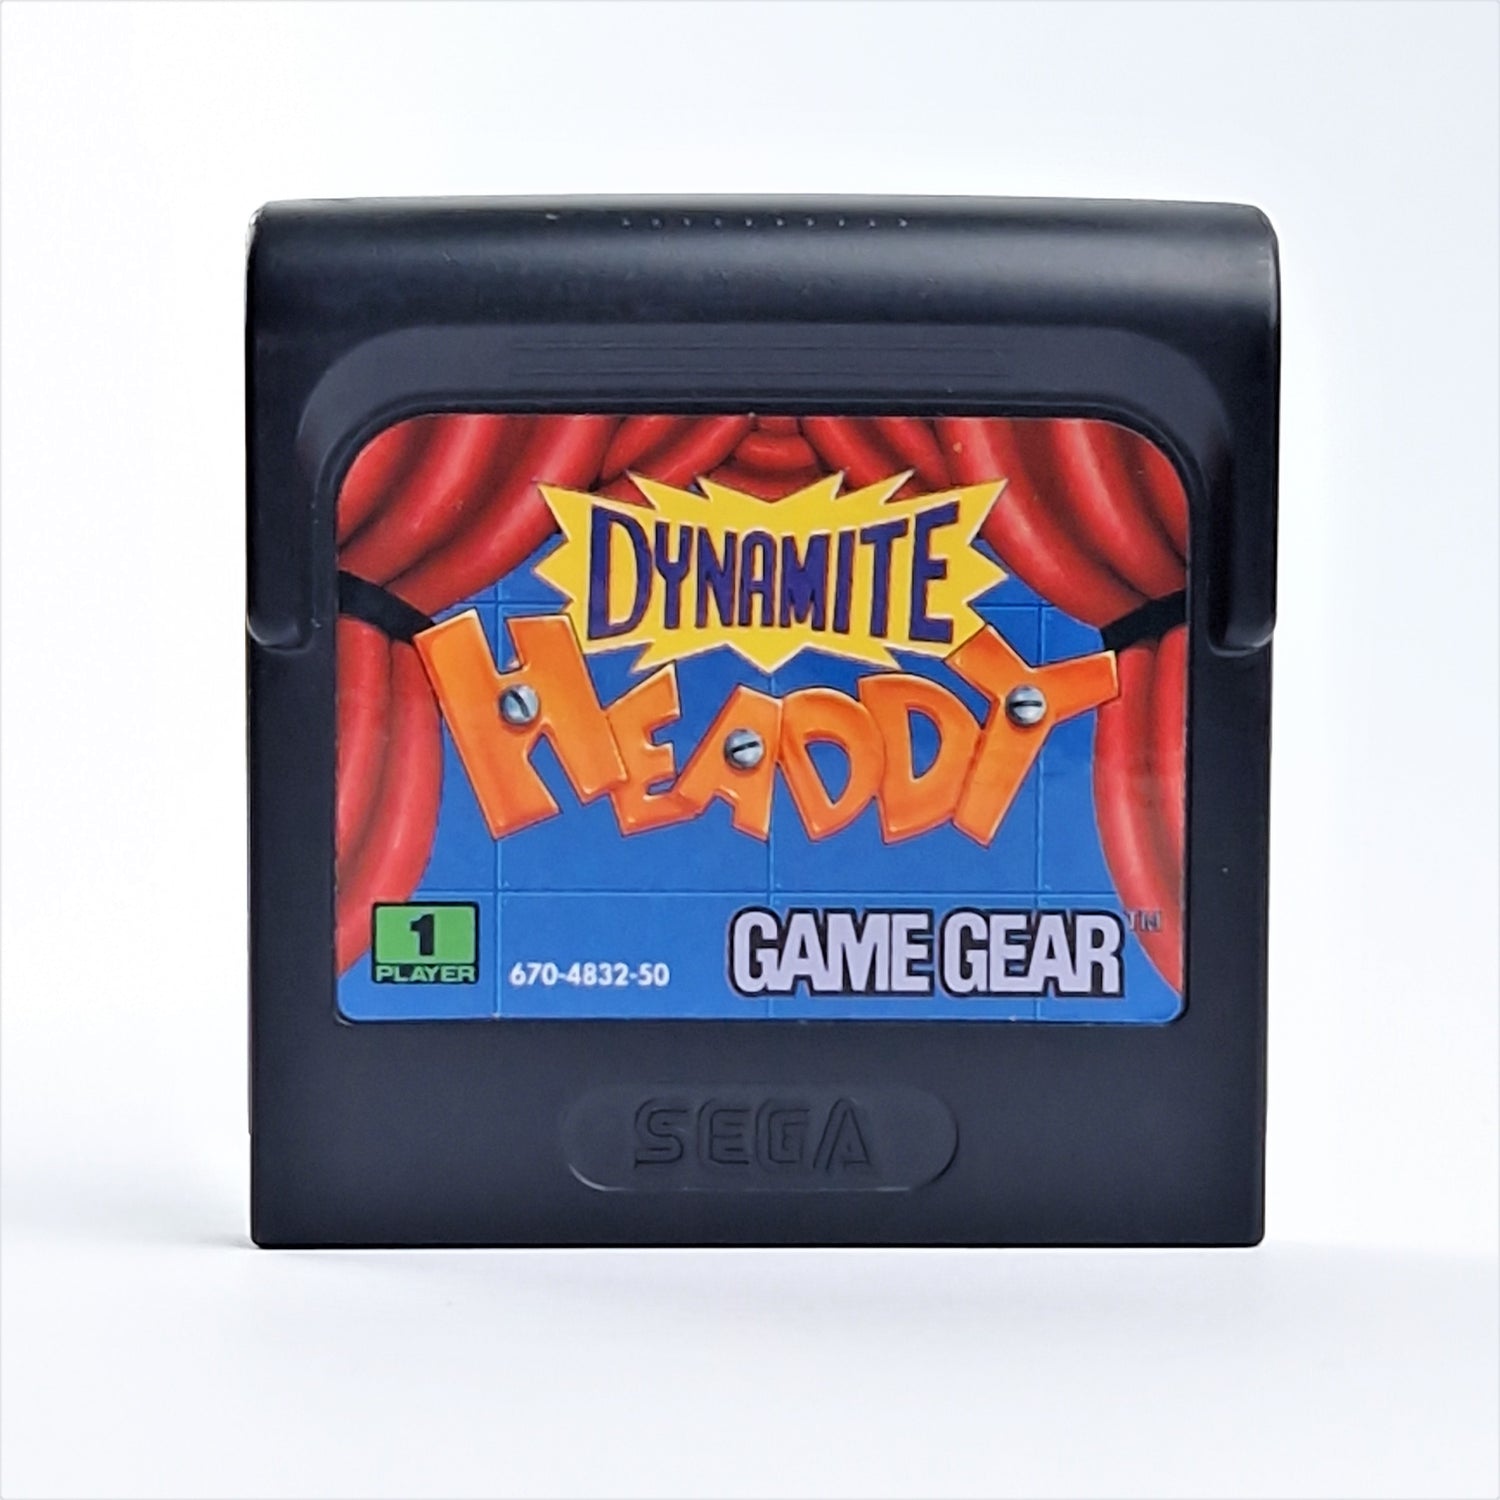 Sega Game Gear Game: Dynamite Headdy - Module Cartridge | PAL Game